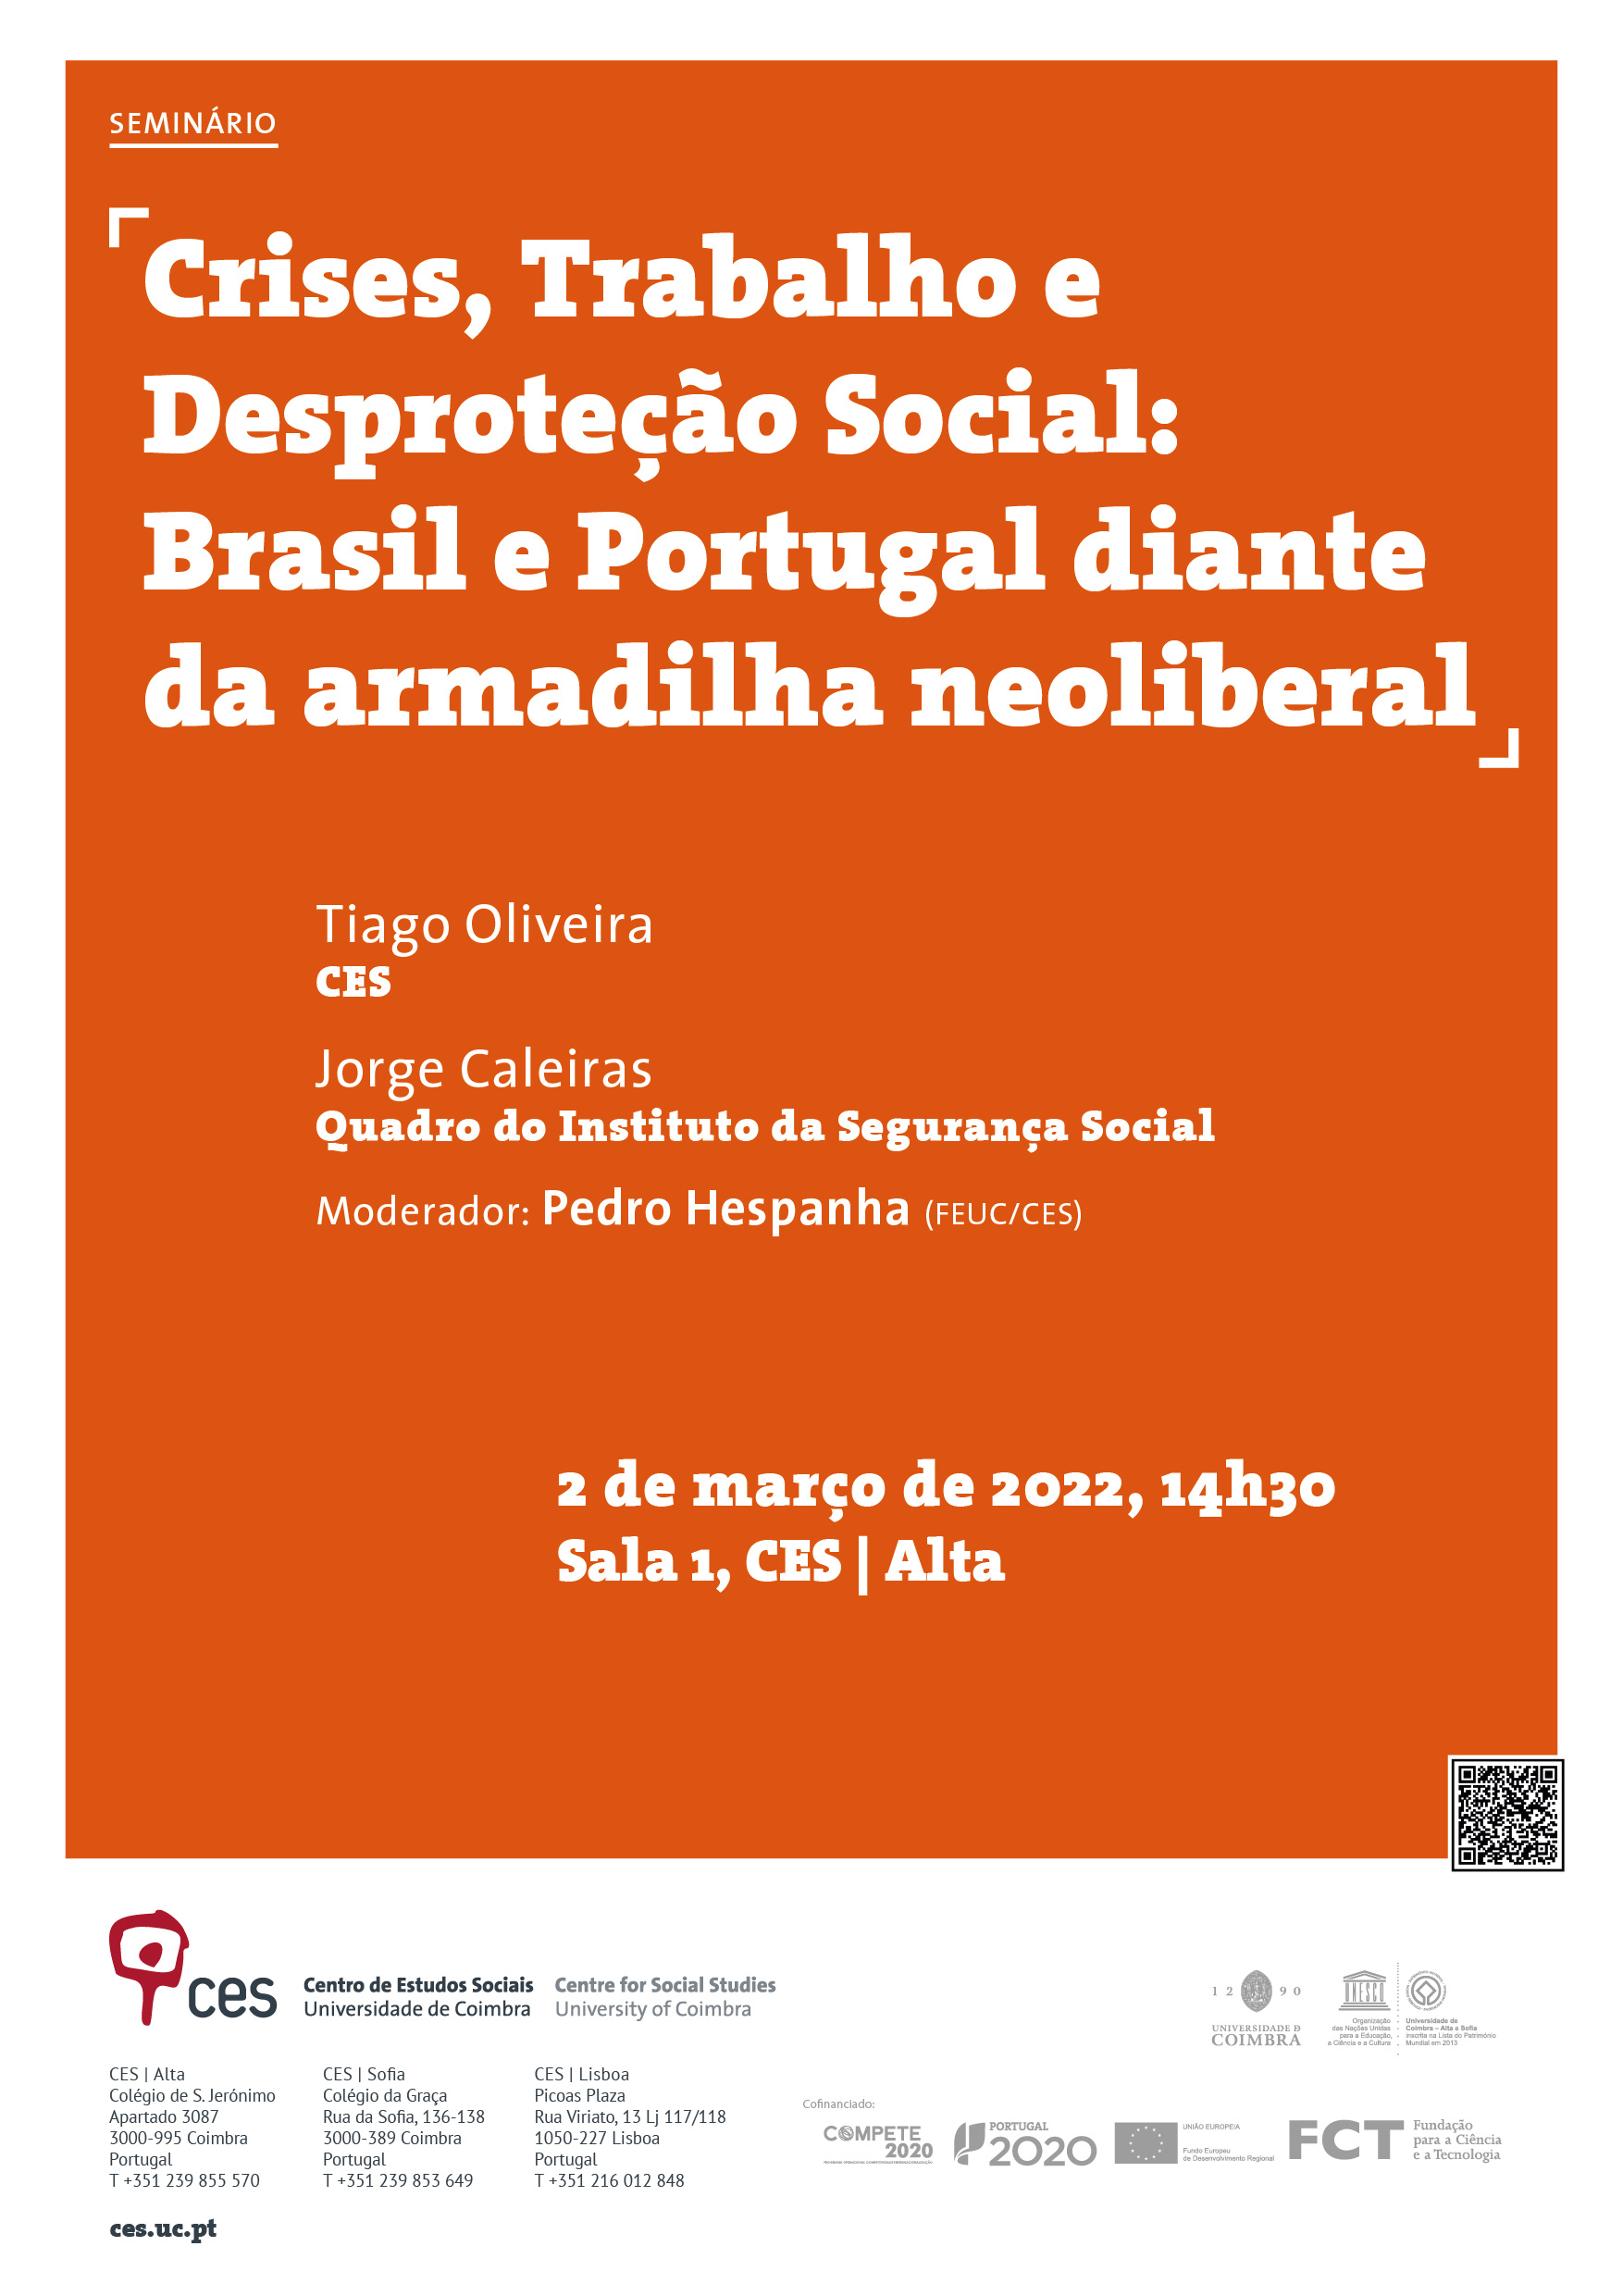 Crises, Trabalho e Desproteção Social: Brasil e Portugal diante da armadilha neoliberal<span id="edit_36711"><script>$(function() { $('#edit_36711').load( "/myces/user/editobj.php?tipo=evento&id=36711" ); });</script></span>